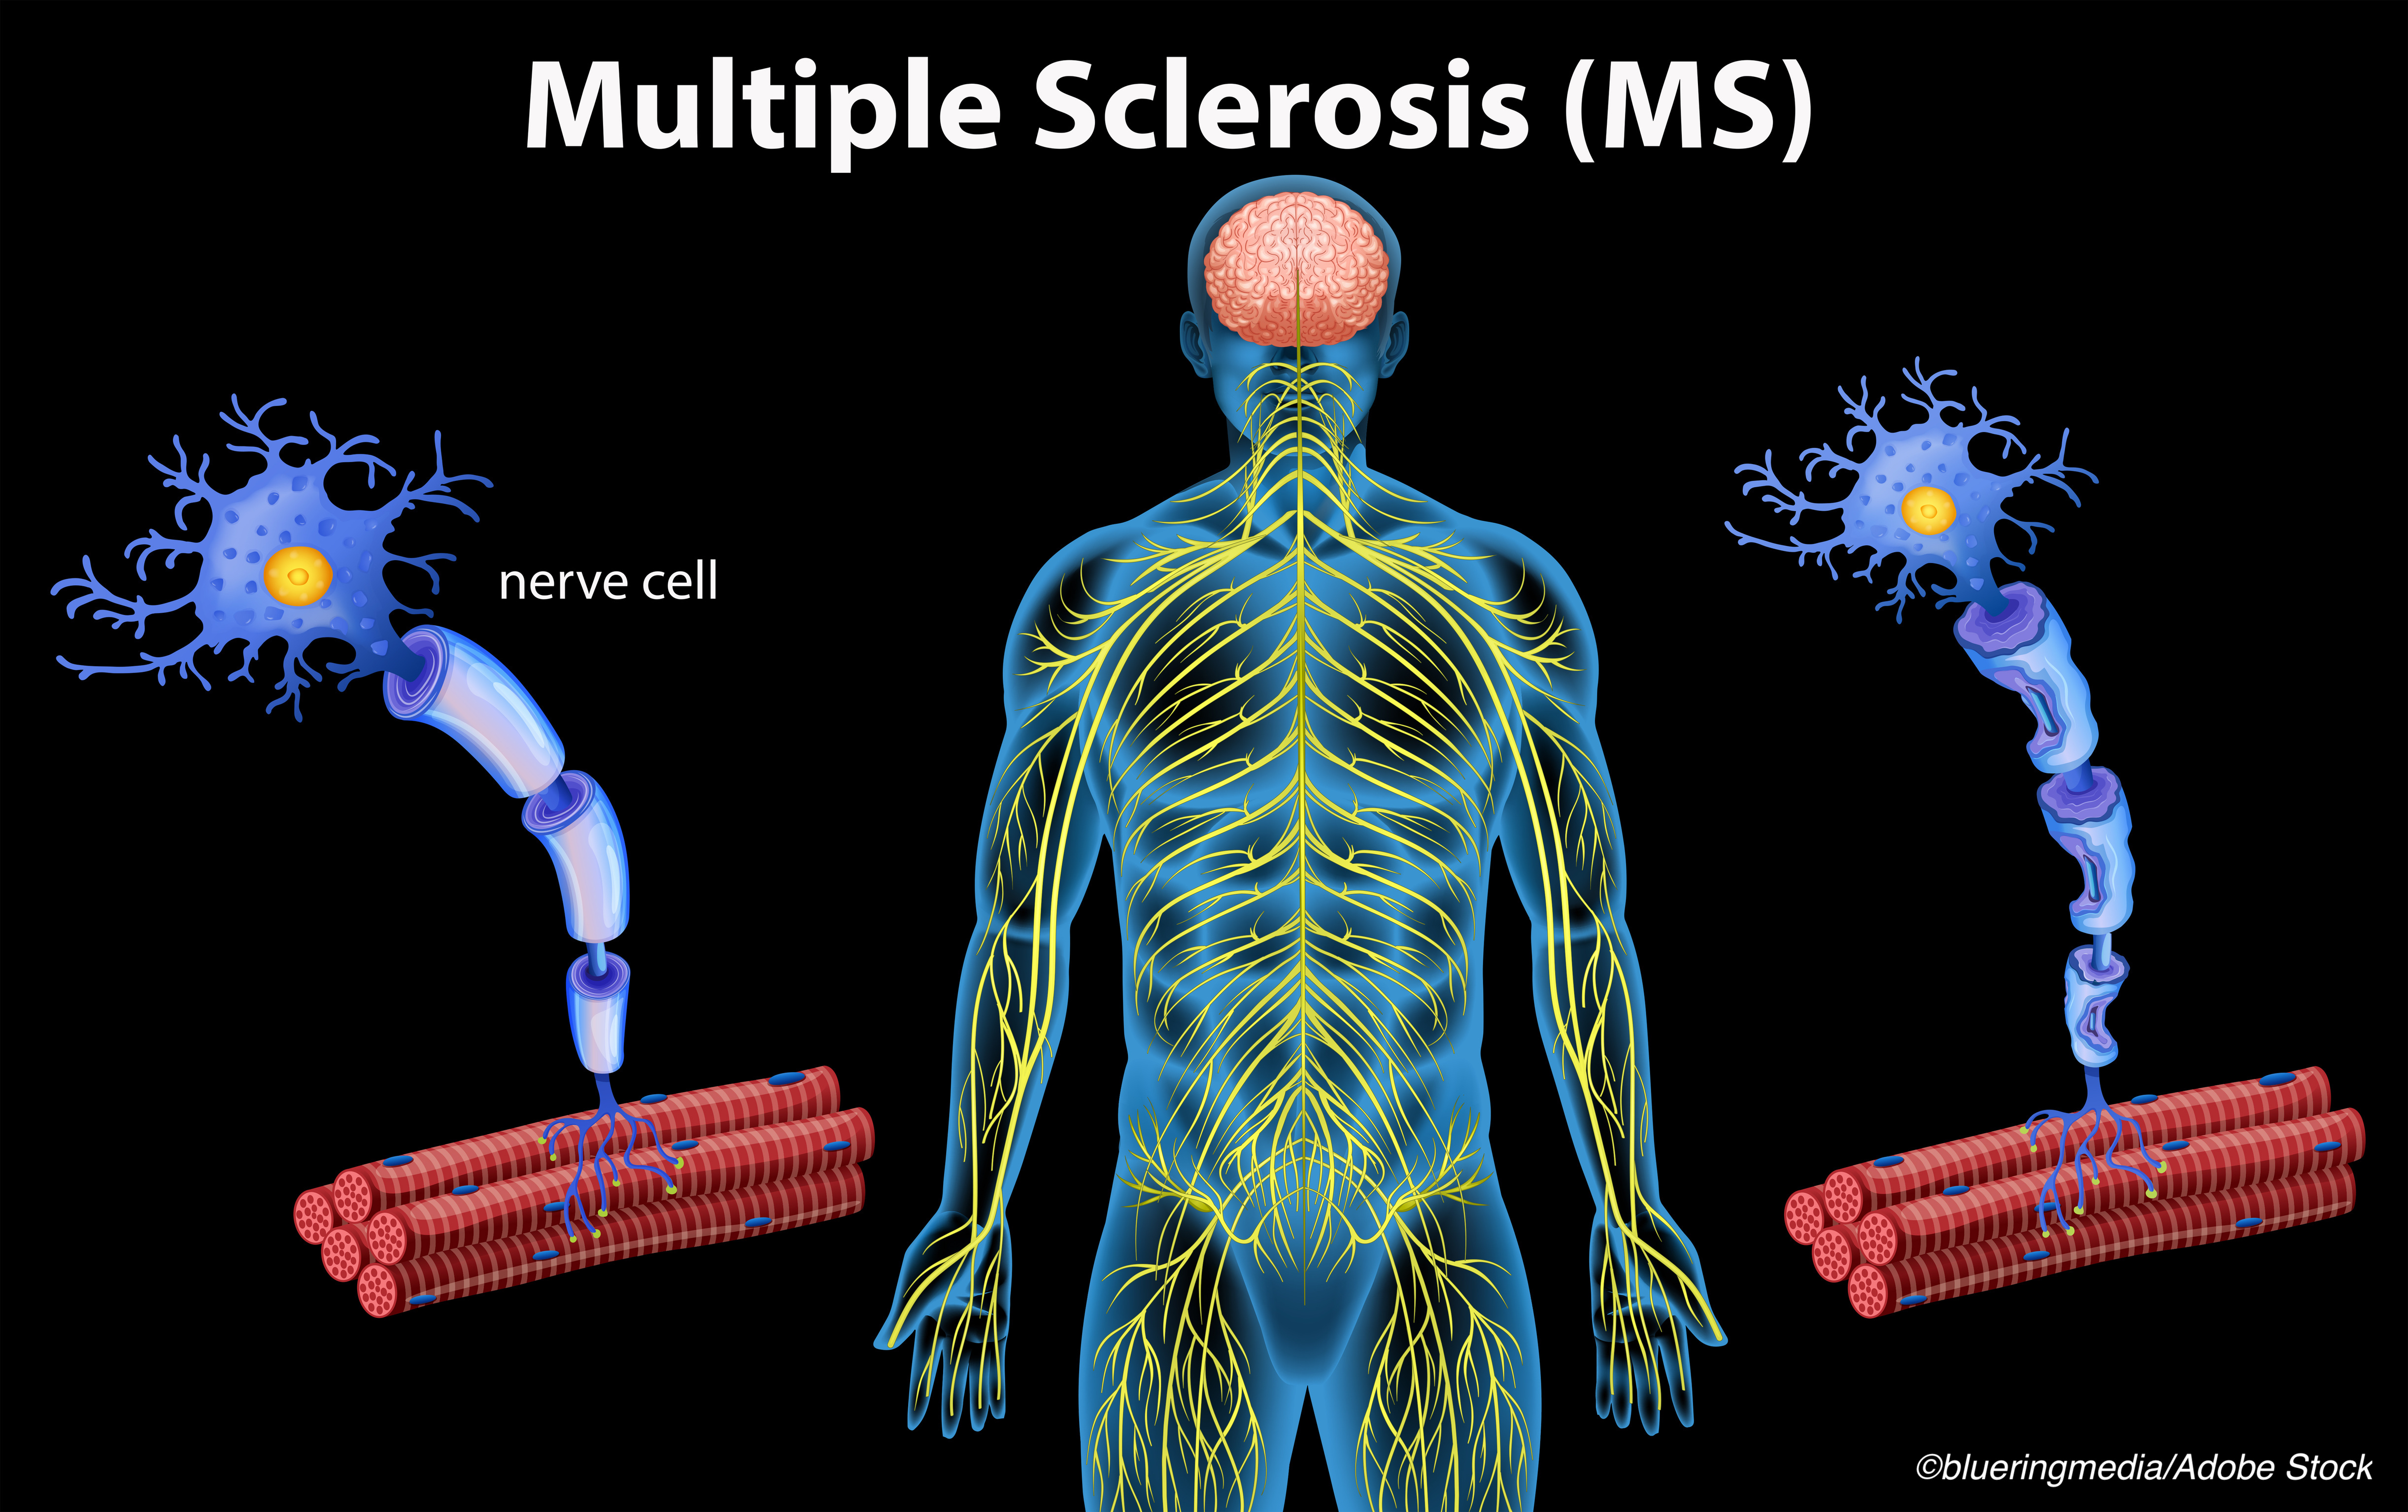 CMSC: Aggressive Versus Escalating MS Treatment Strategies